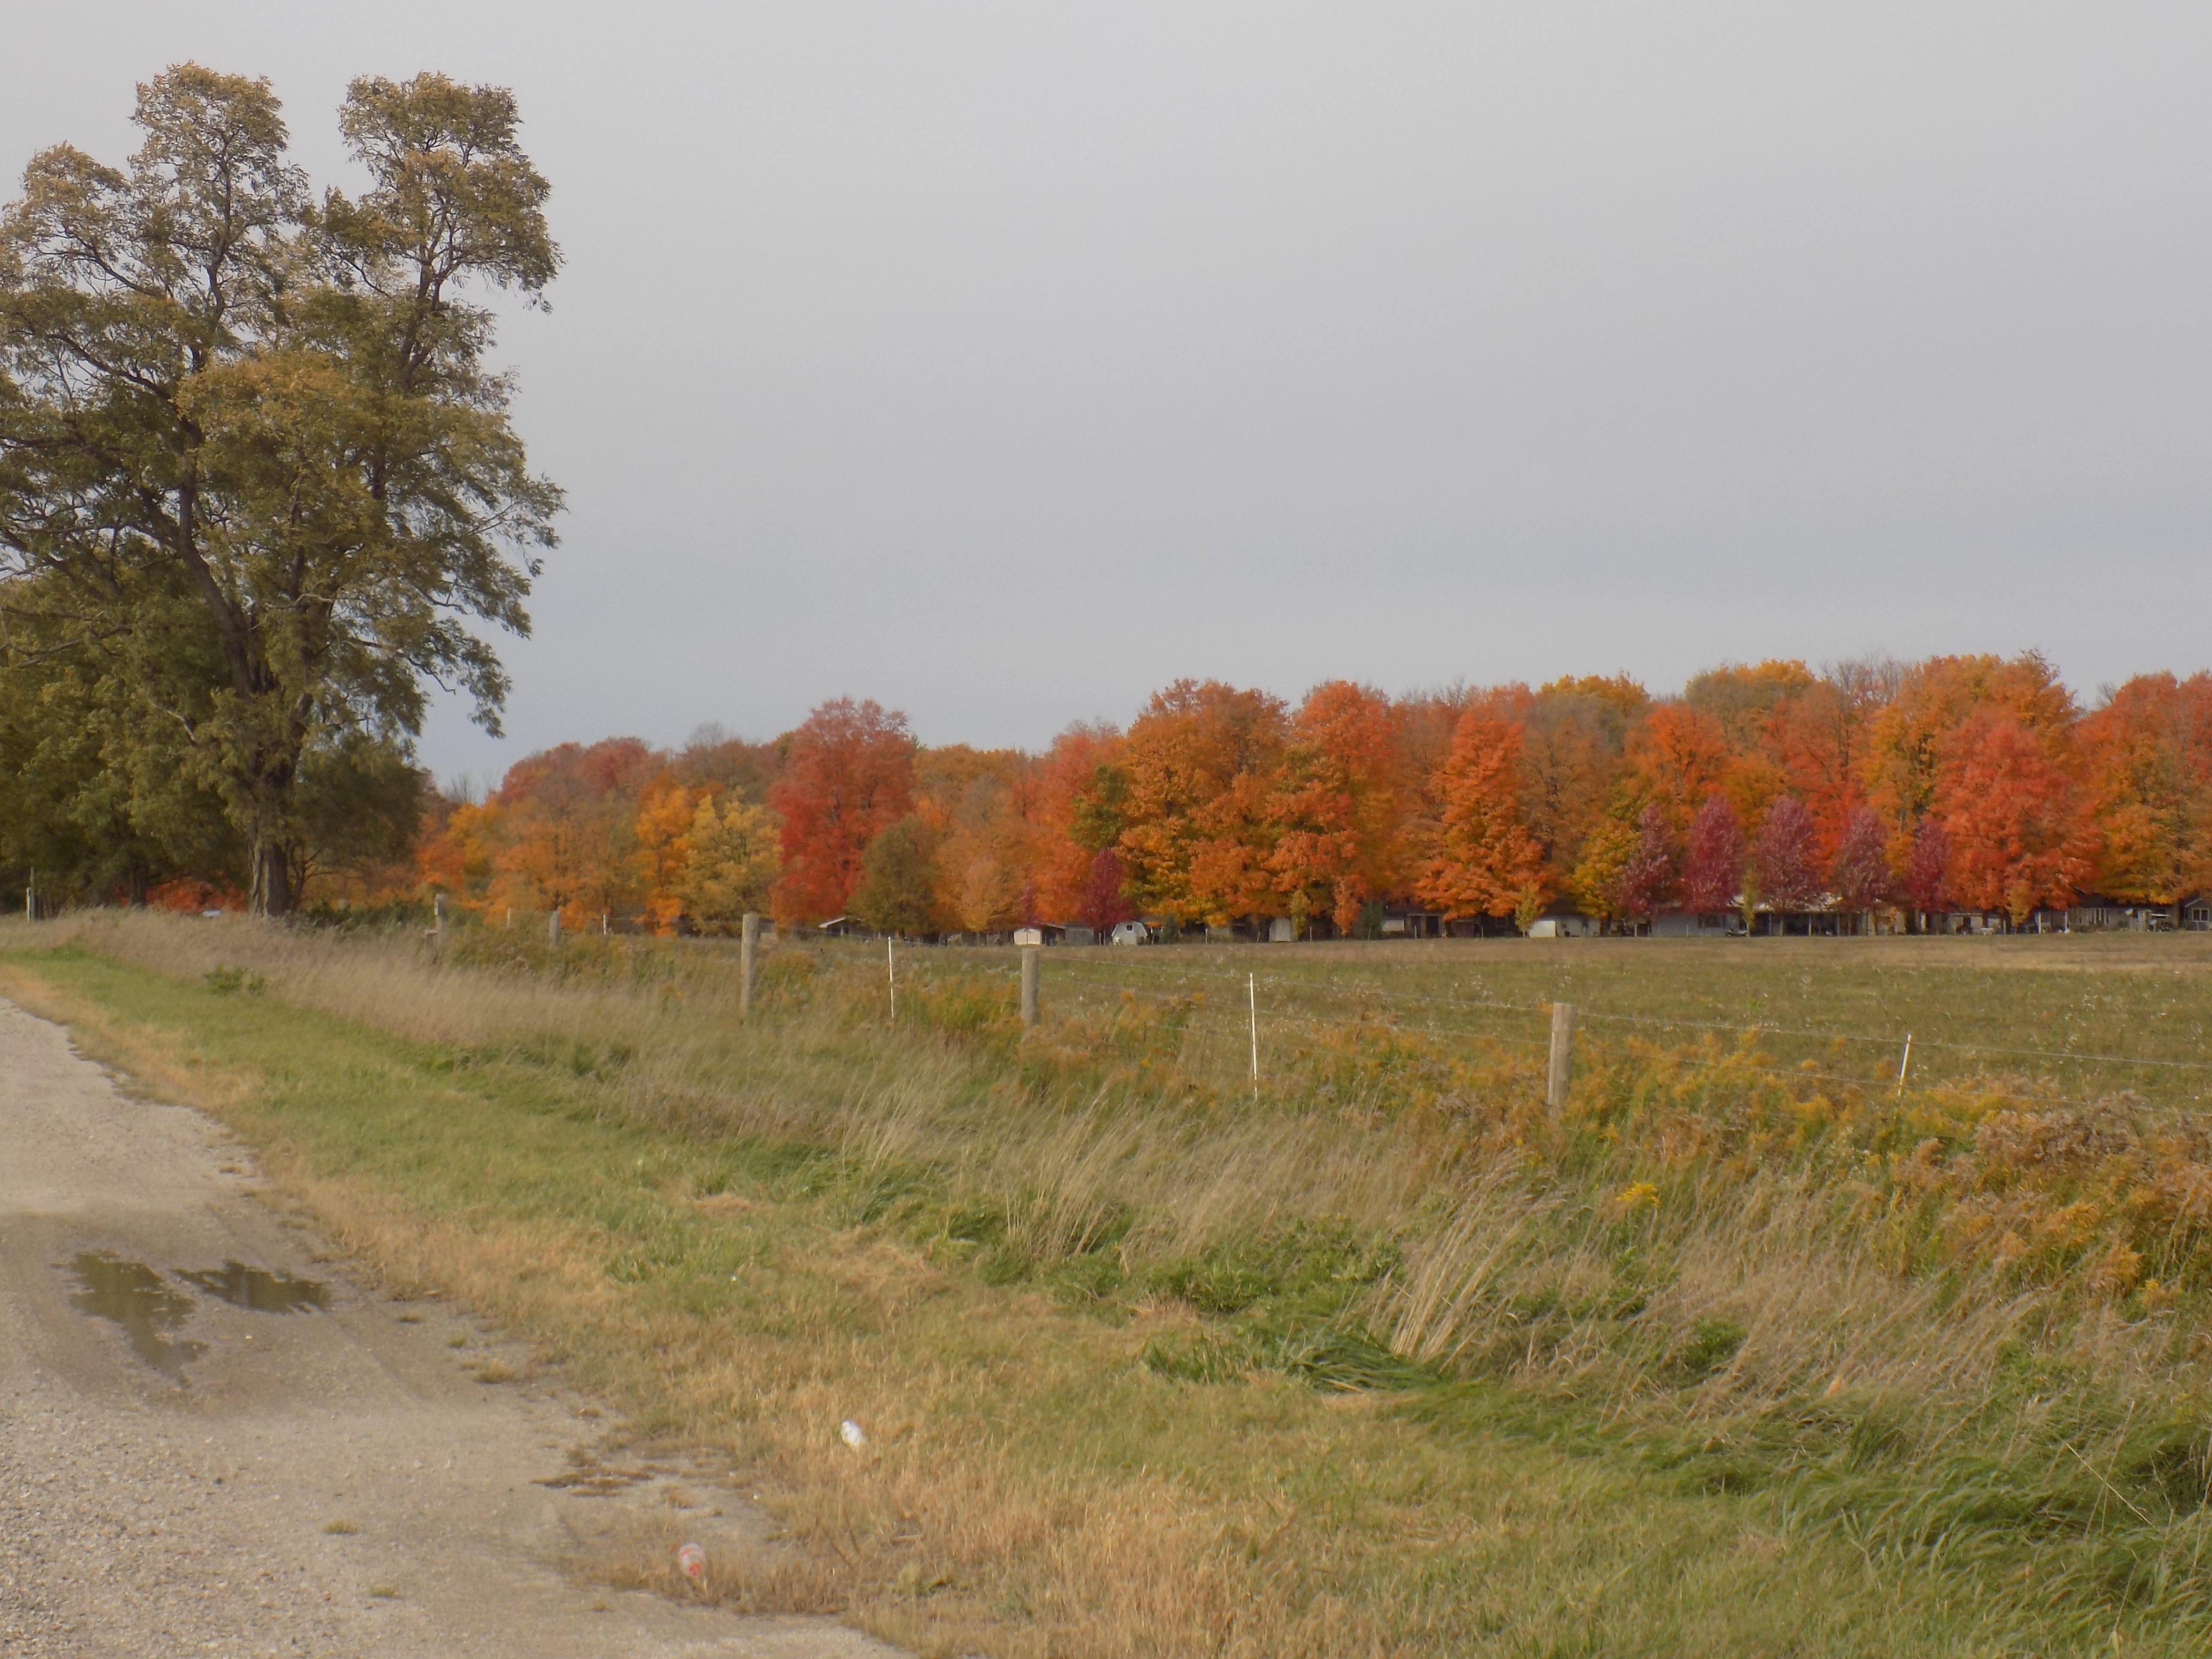 Tree, autumn, blue sky, field, road